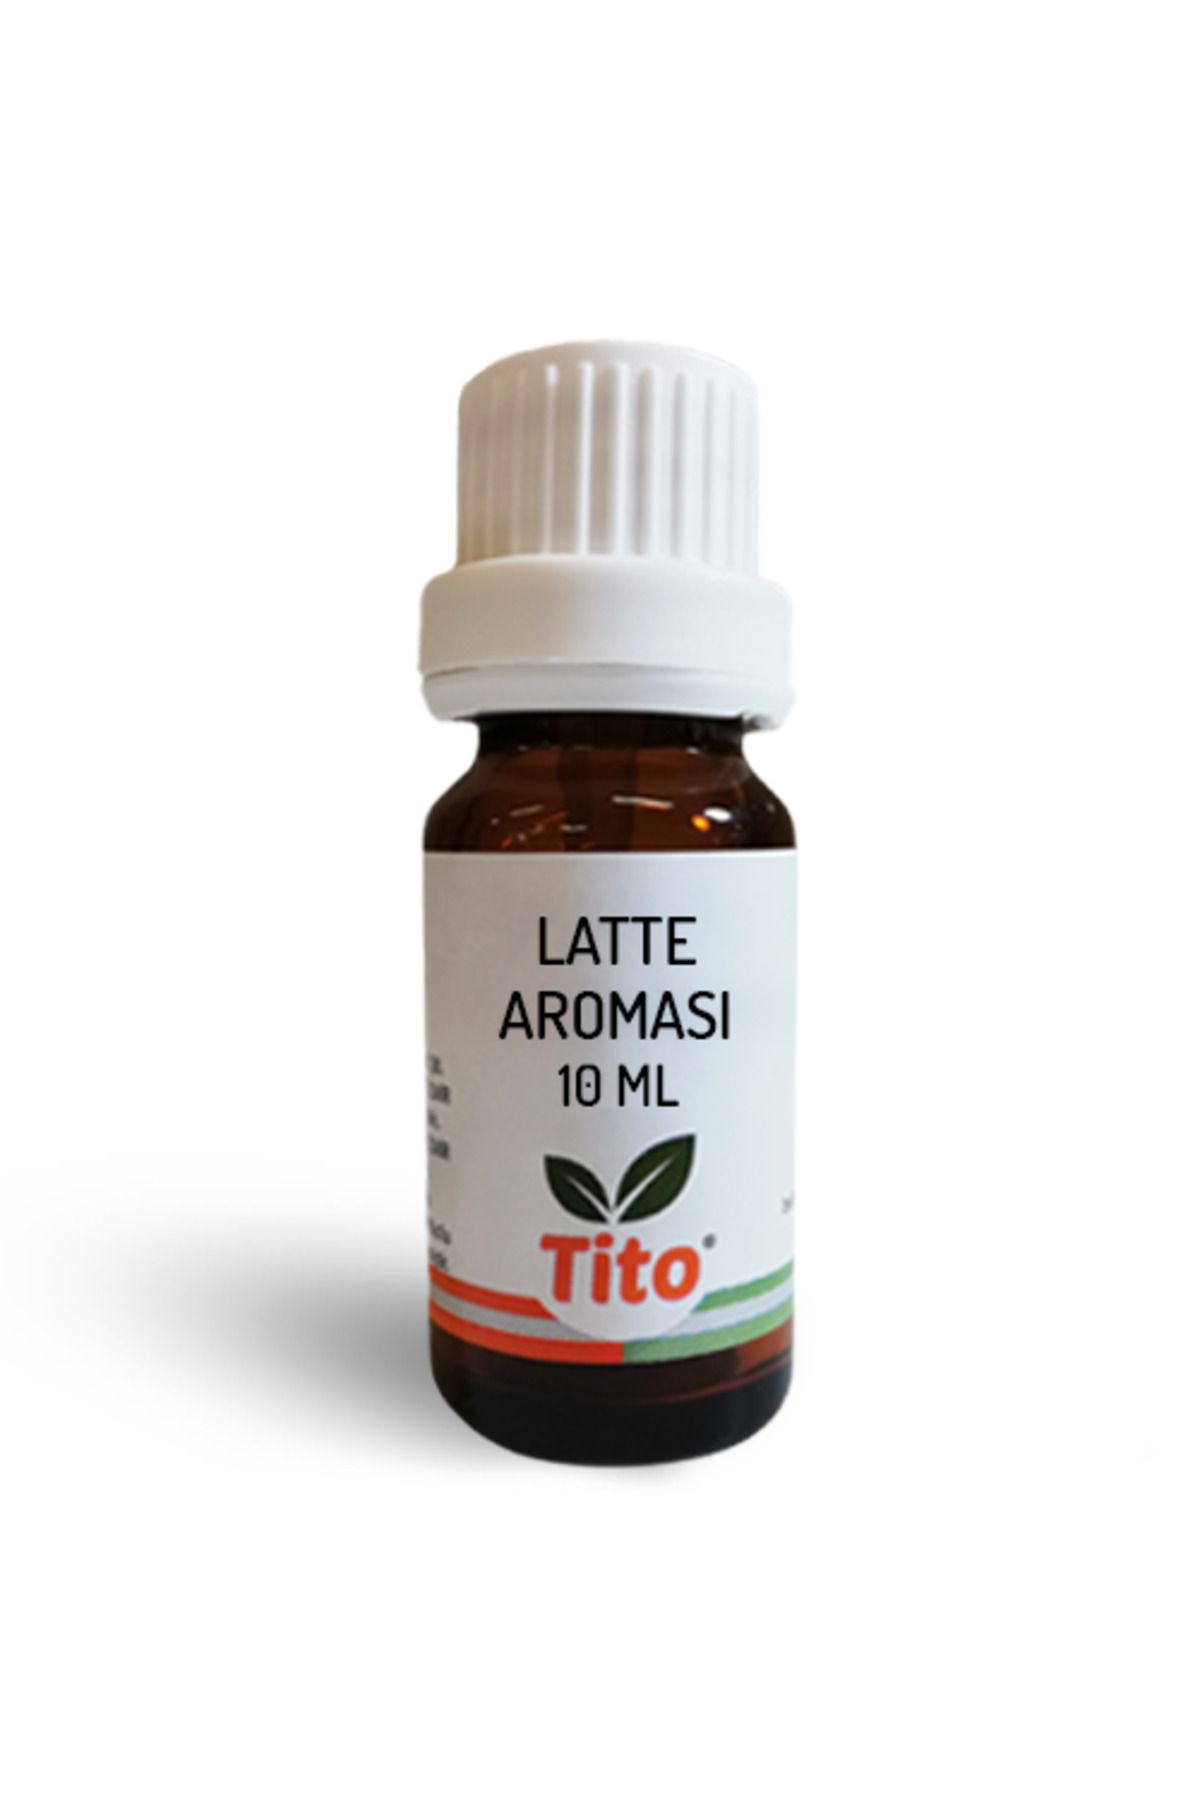 tito Limonata Aroması 10 ml